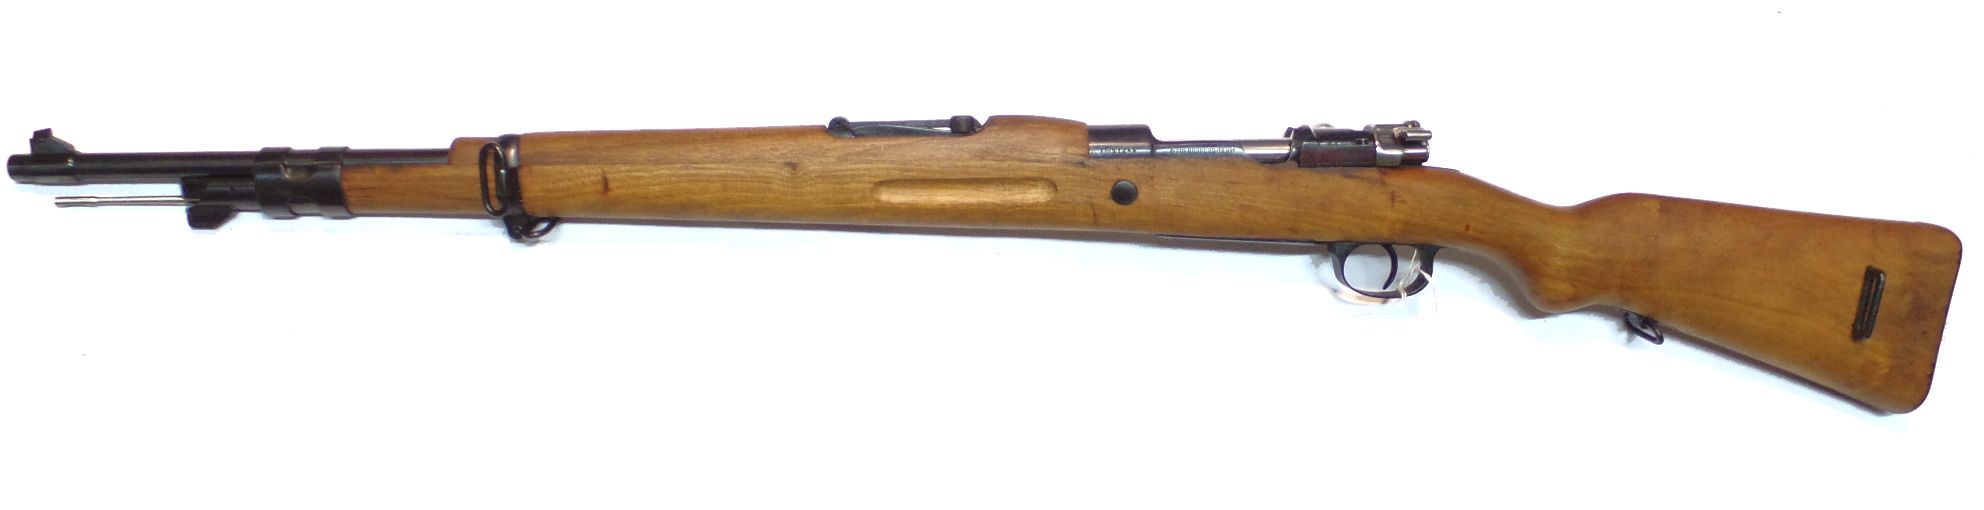 SANTA BARBARA 98K calibre 8x57IS